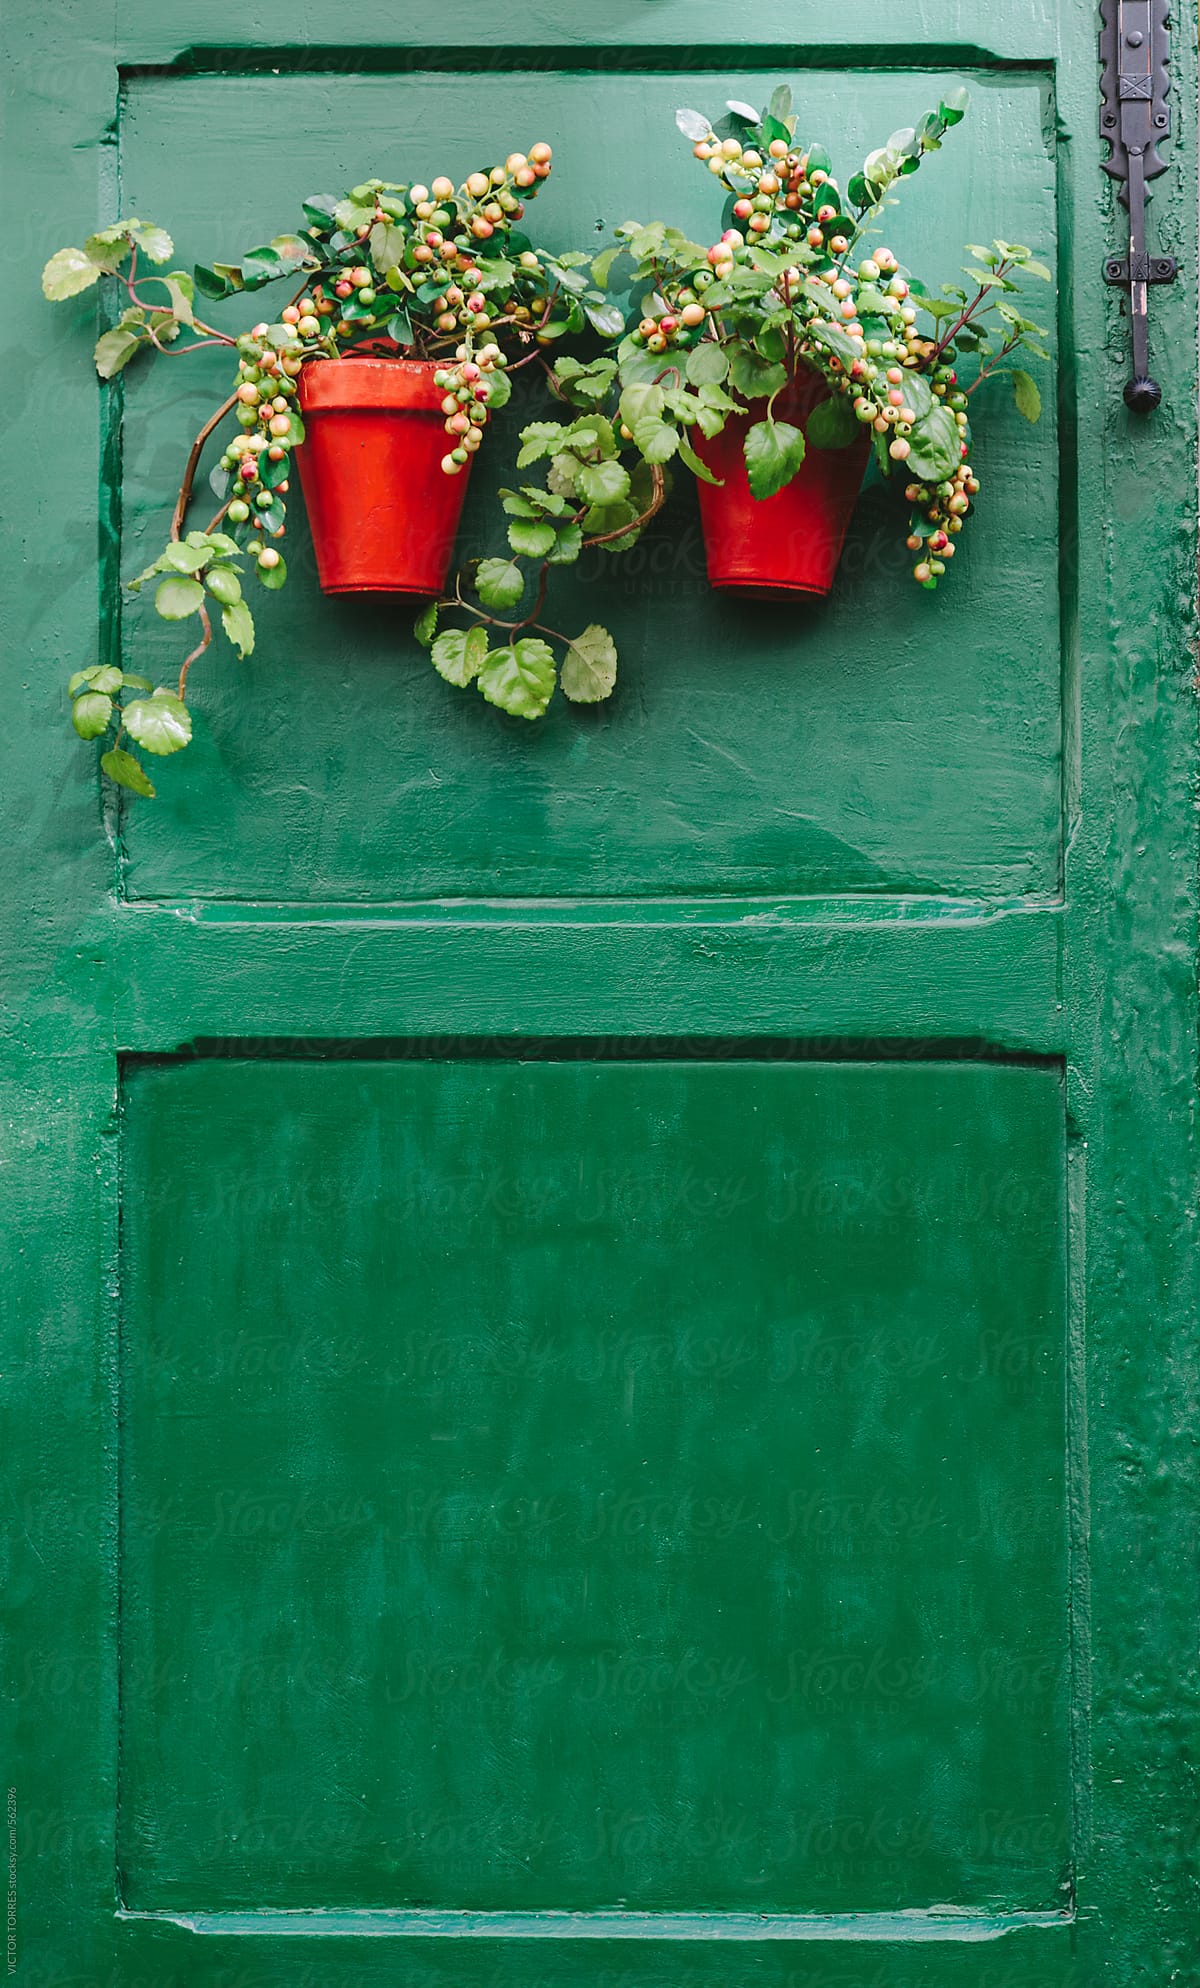 Green Wooden Door with Small Plants